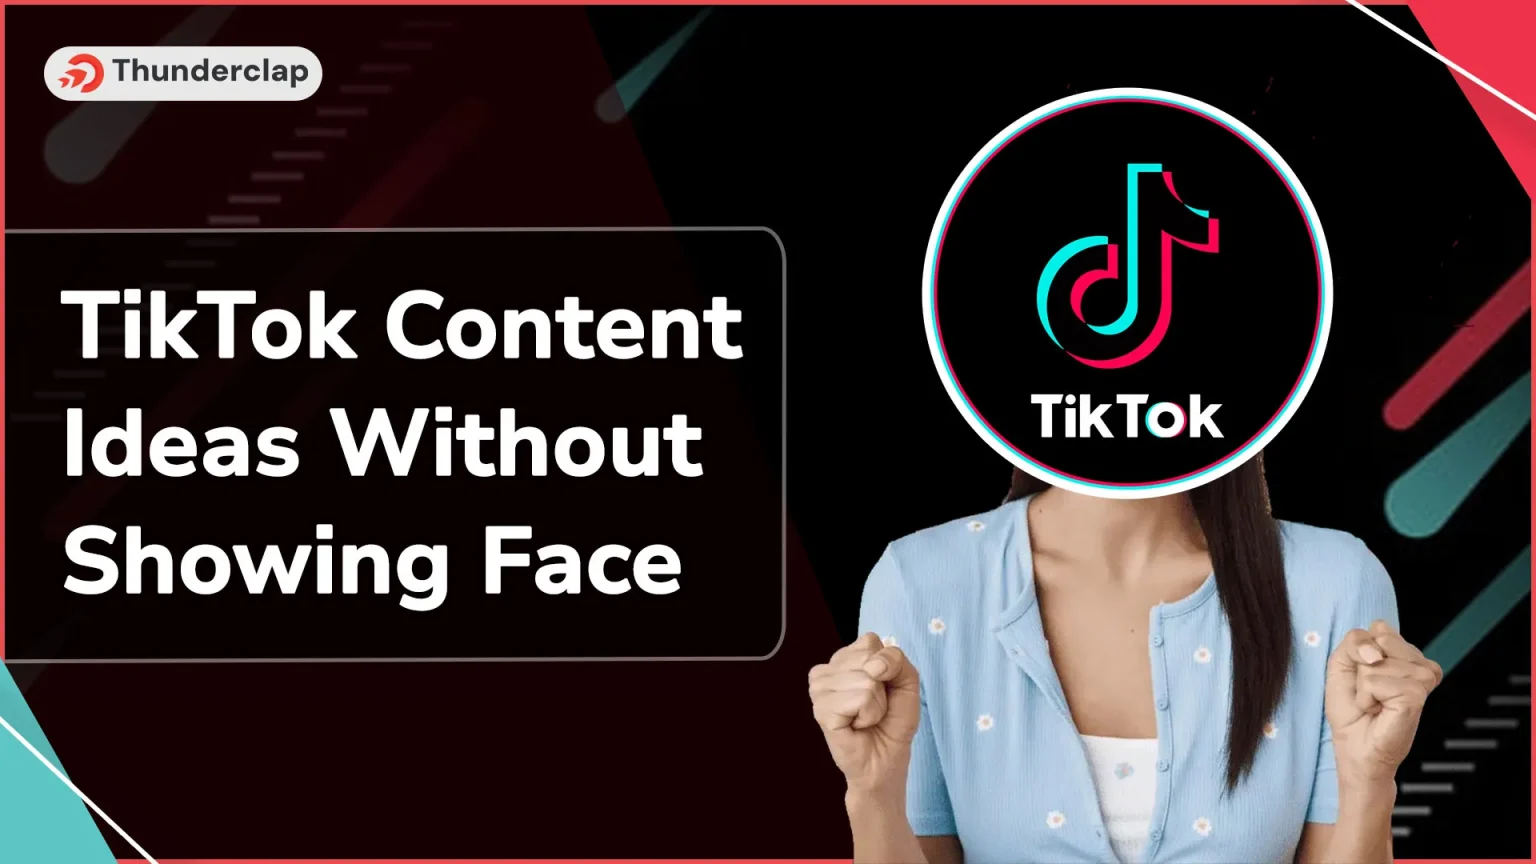 TikTok Content Ideas Without Showing Face
